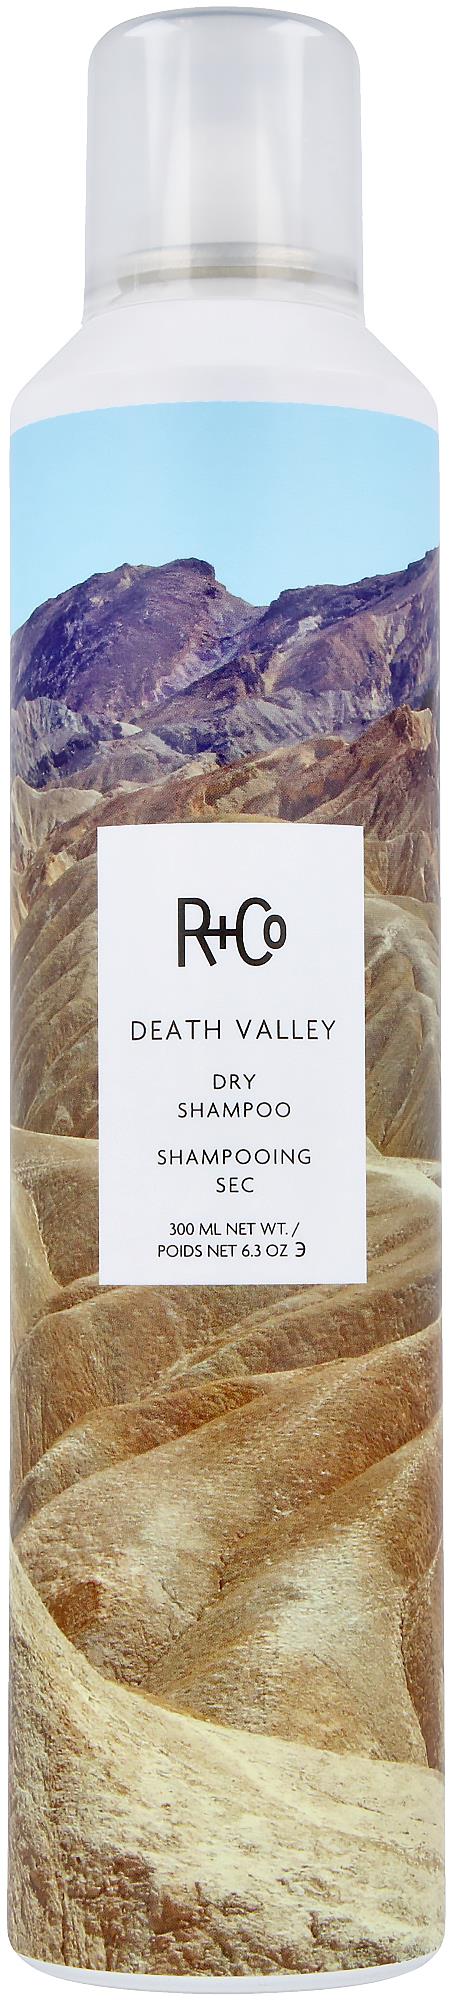 R+Co Valley Shampoo 300 ml | lyko.com